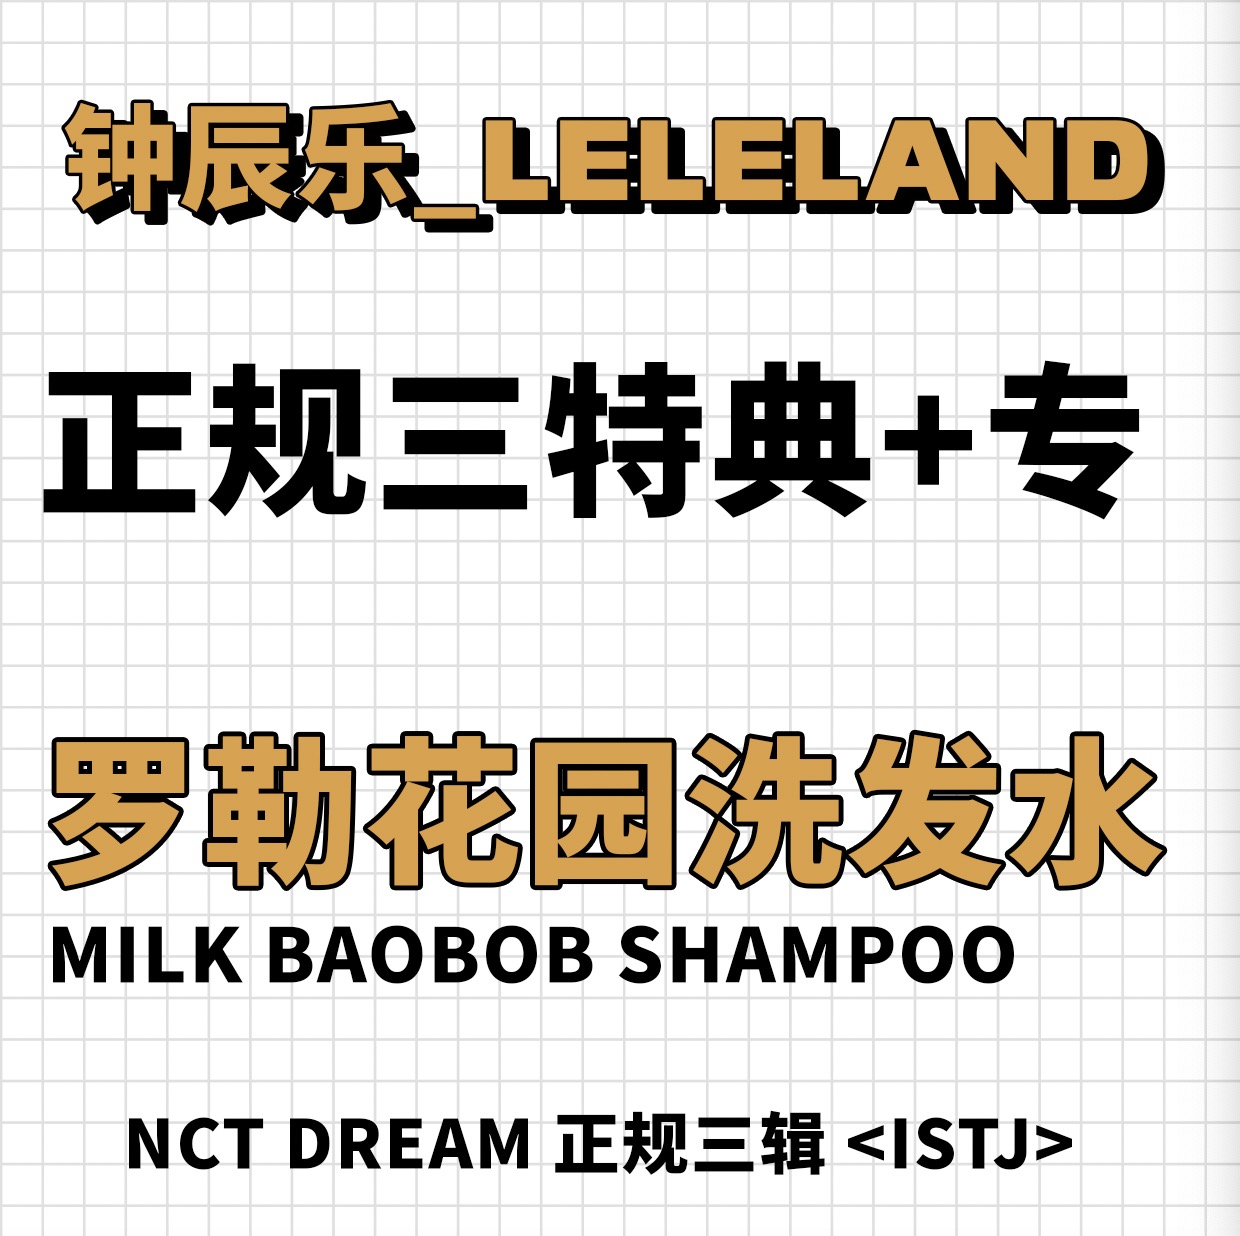 [全款 洗发水特典专] NCT DREAM - 正规3辑 [ISTJ]_钟辰乐吧_ChenLeBar